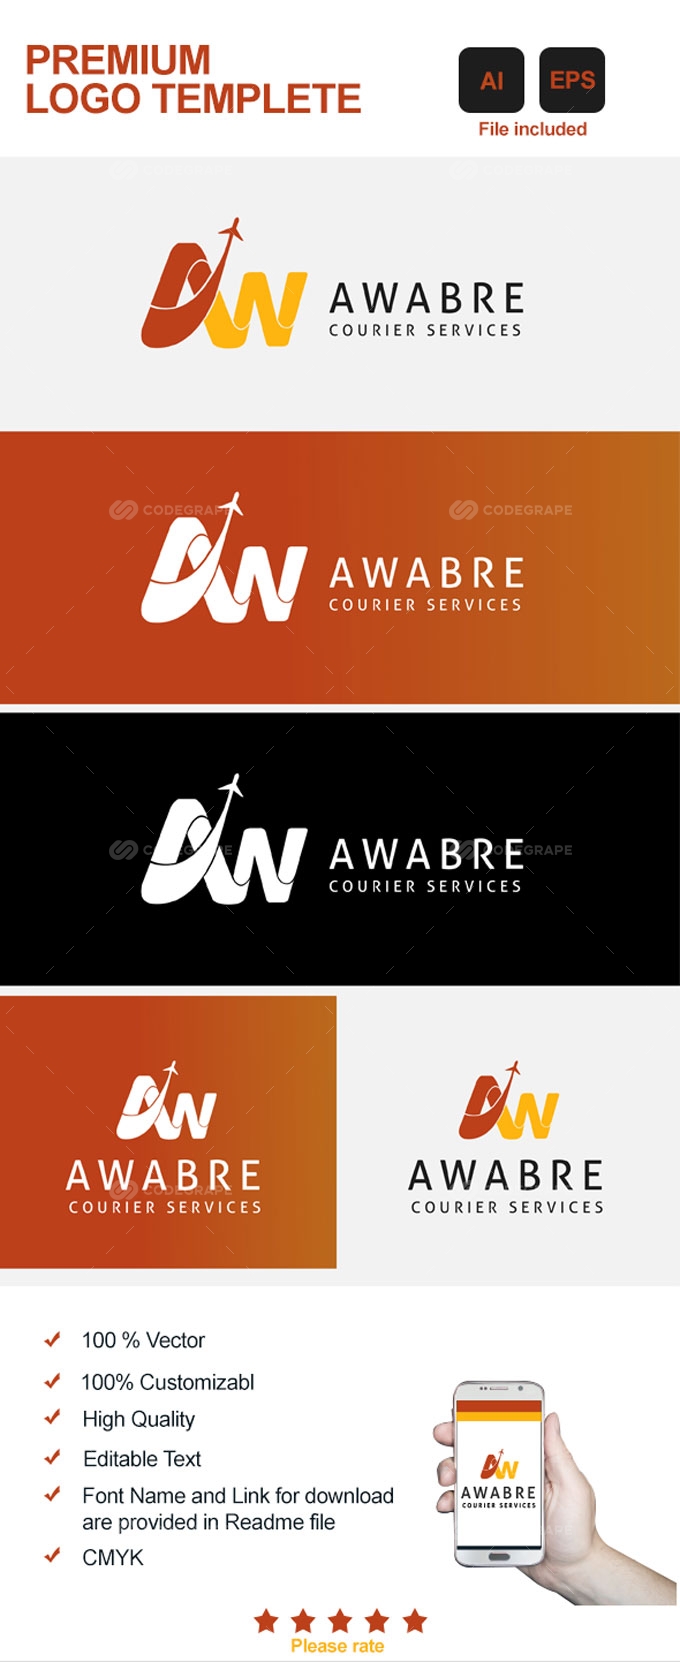 Letter "A" (AWABRE)  Logo